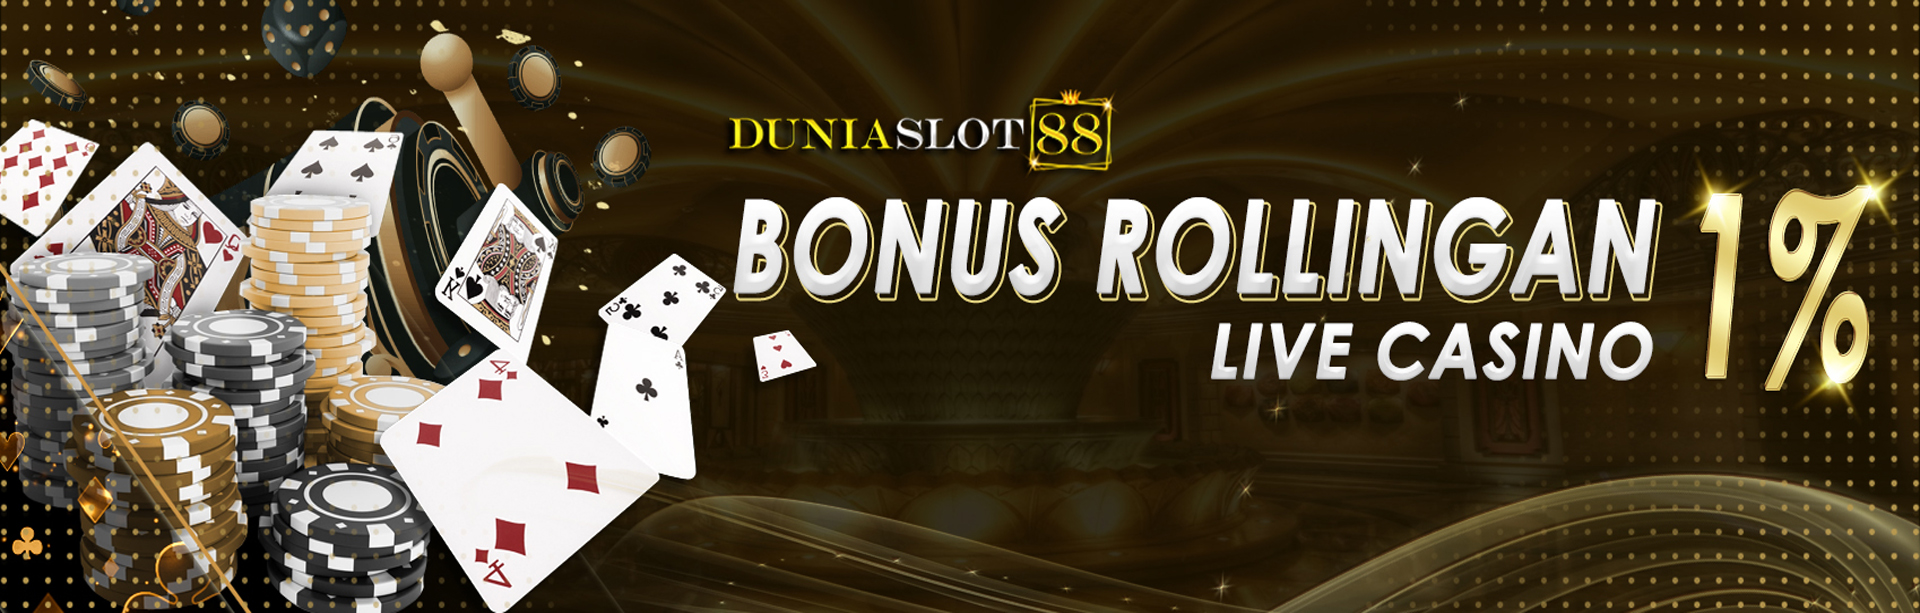 Bonus Rollingan 1% Live Casino